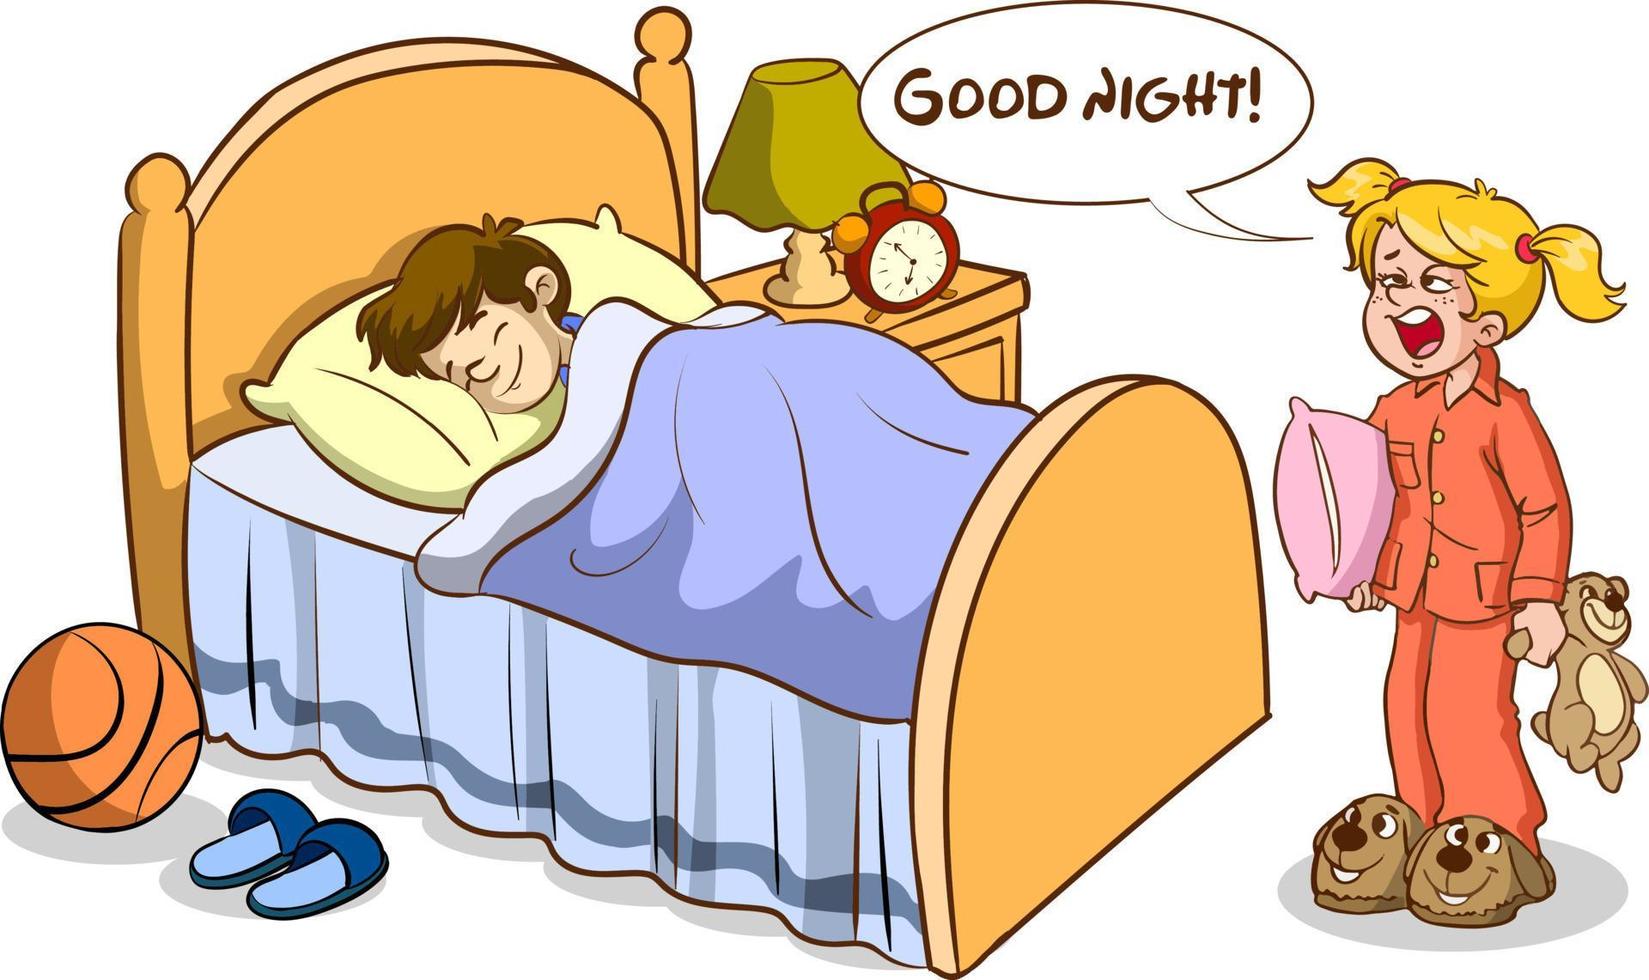 sleepy yawning kids and parents good night cartoon vector